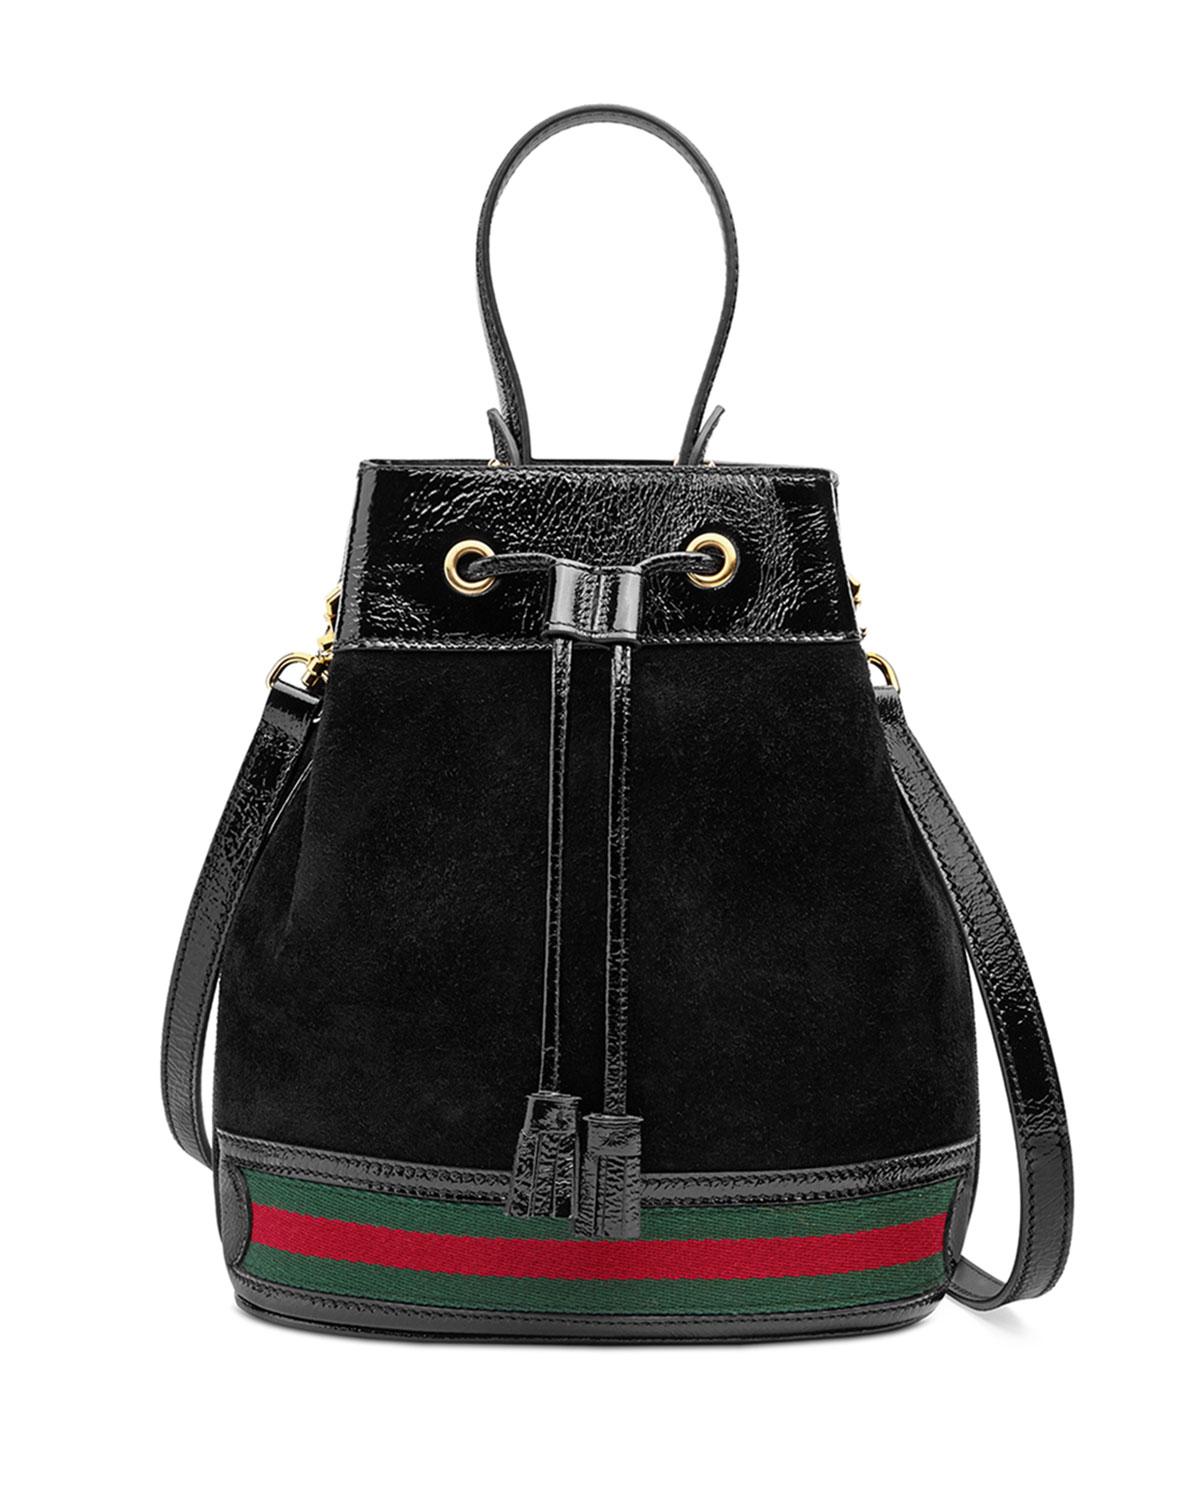 Gucci Mini Suede Bucket Bag in Black - Lyst